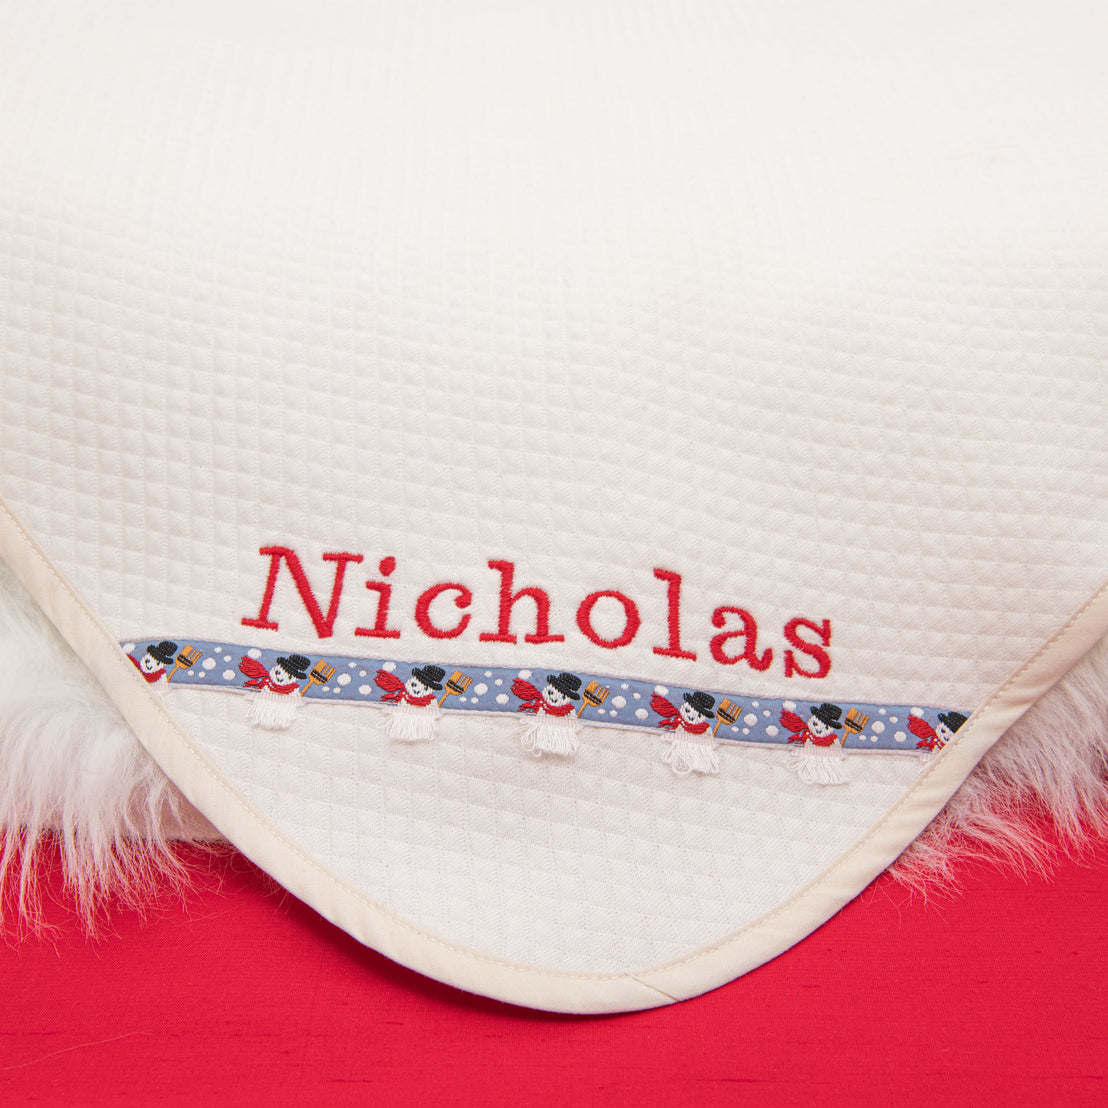 Nicholas Gift Set - Save 10%